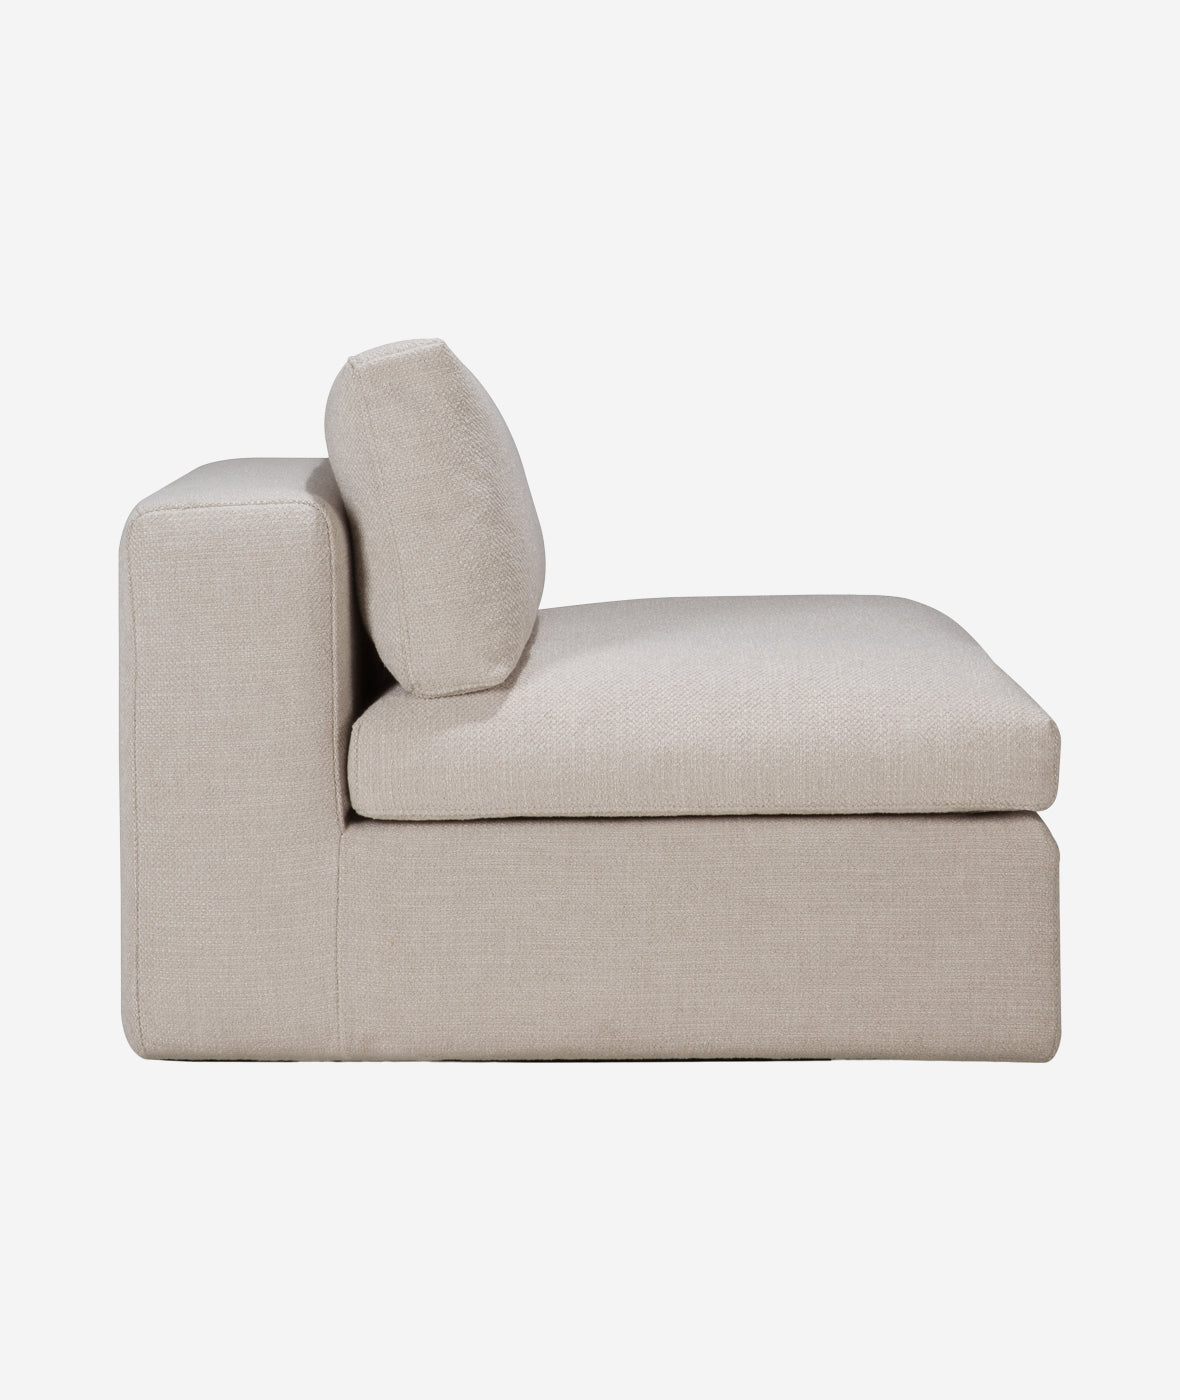 Mellow Modular Armless Chair - More Options